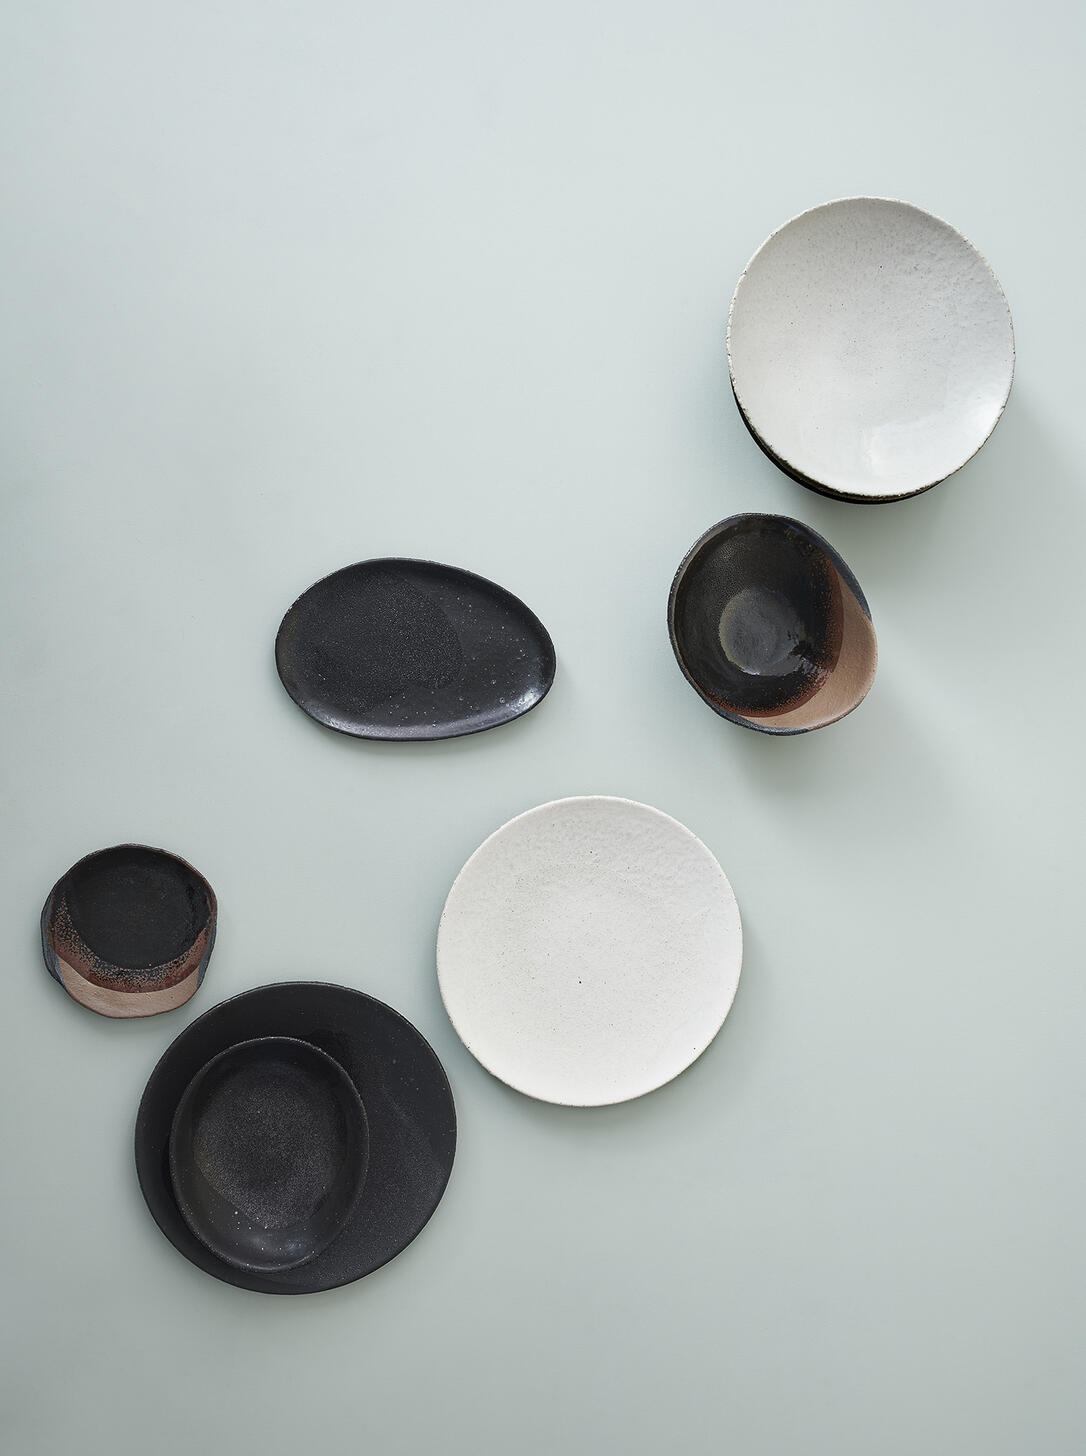 bowl wabi noir ceramic manufacturer